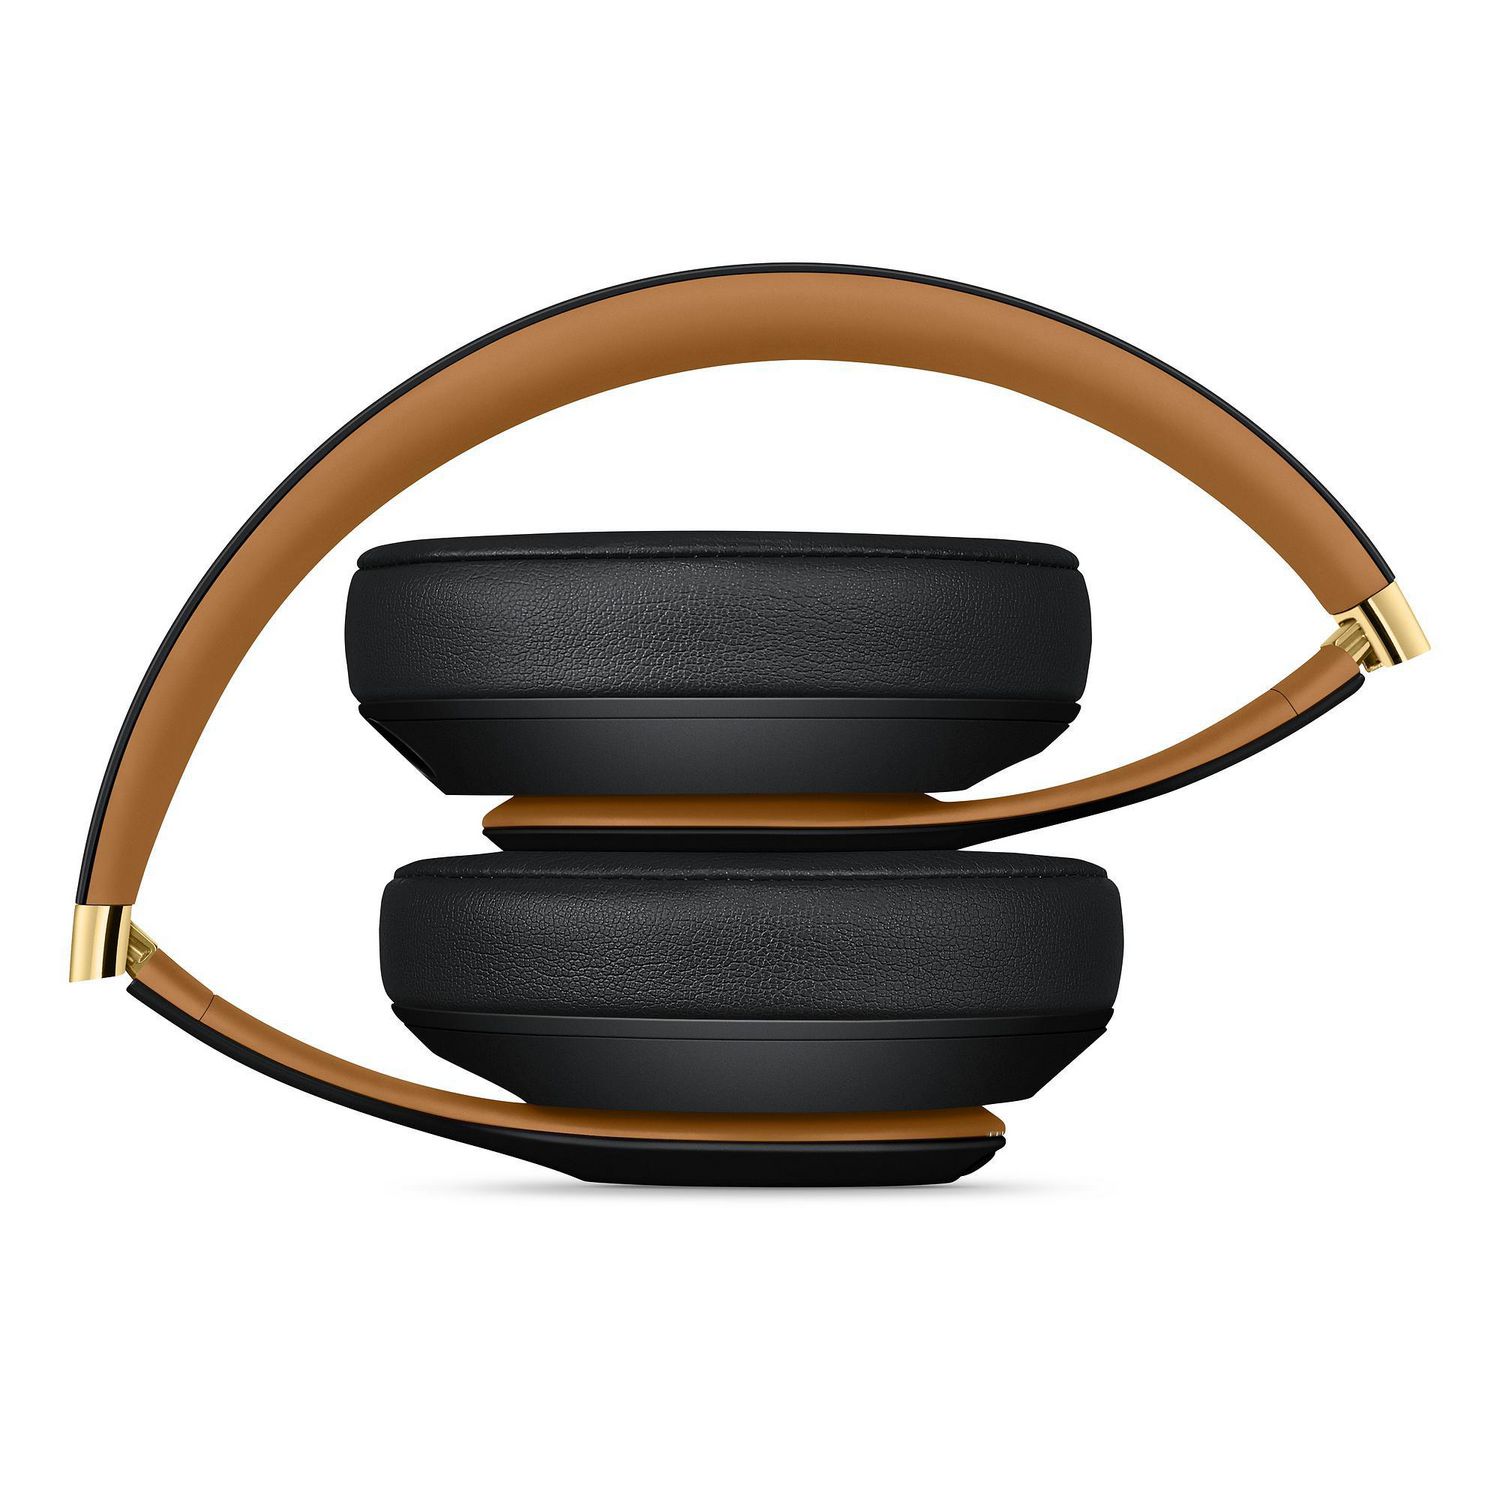 Beats Studio3 Wireless Over-Ear Headphones – The Beats Skyline